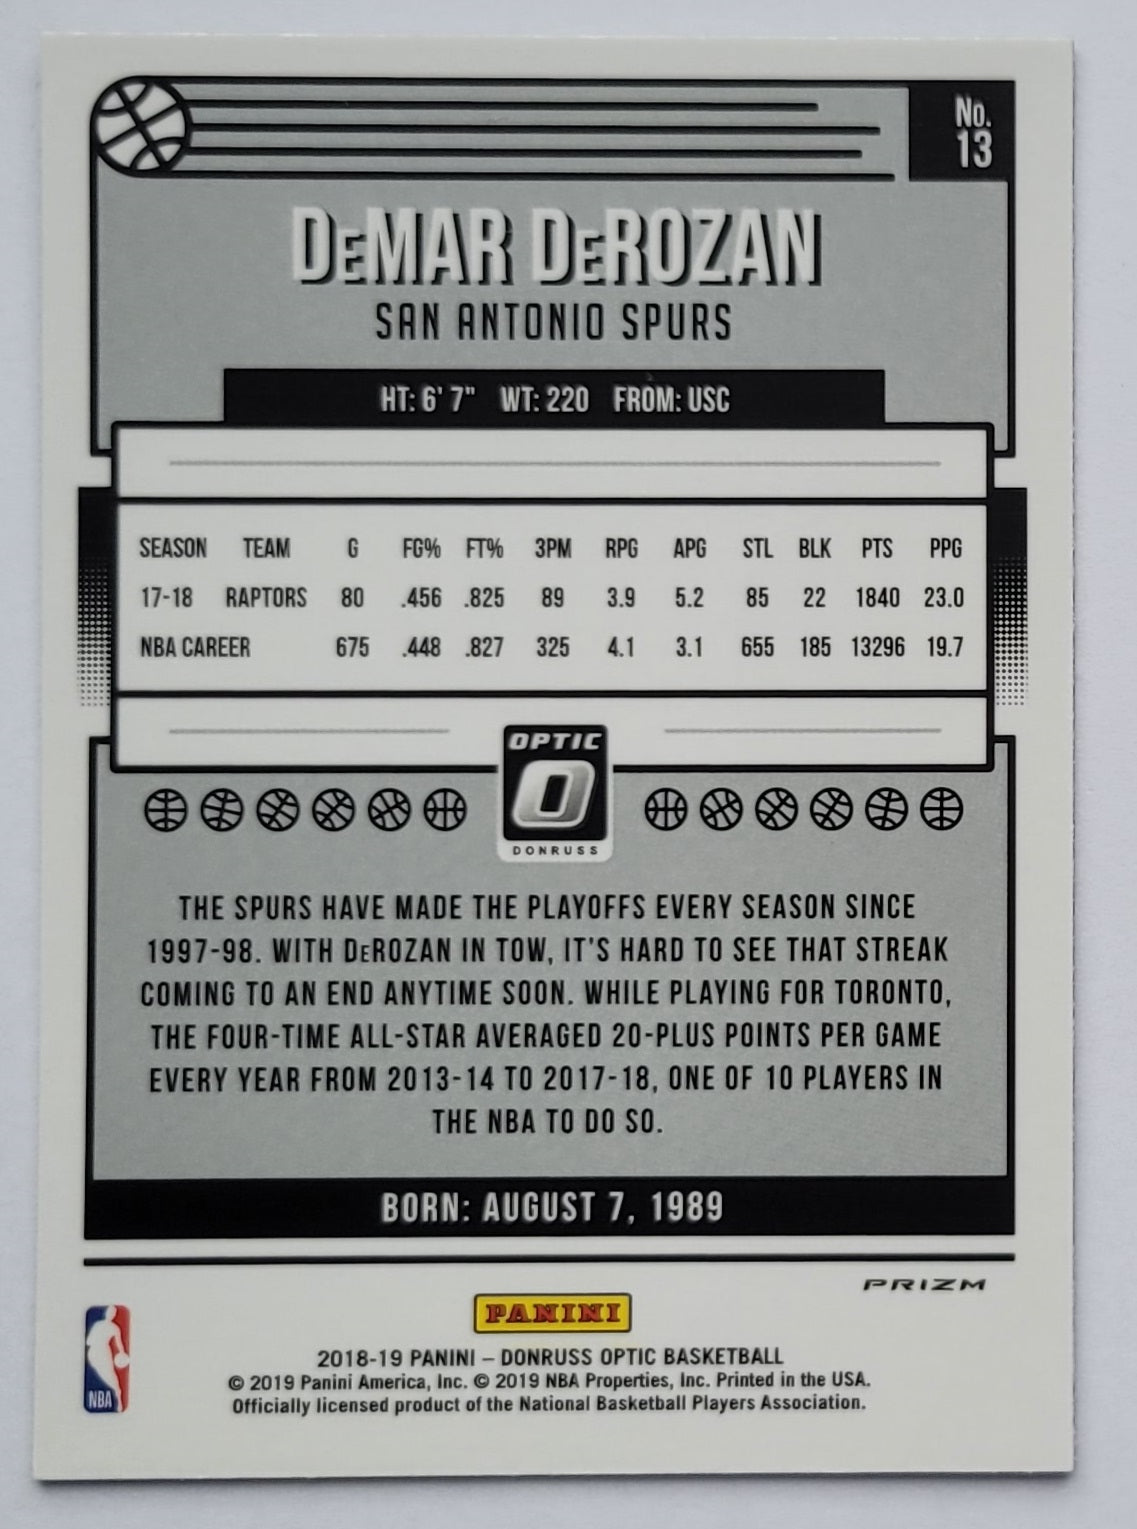 DeMar DeRozan - 2018-19 Donruss Optic Purple #13